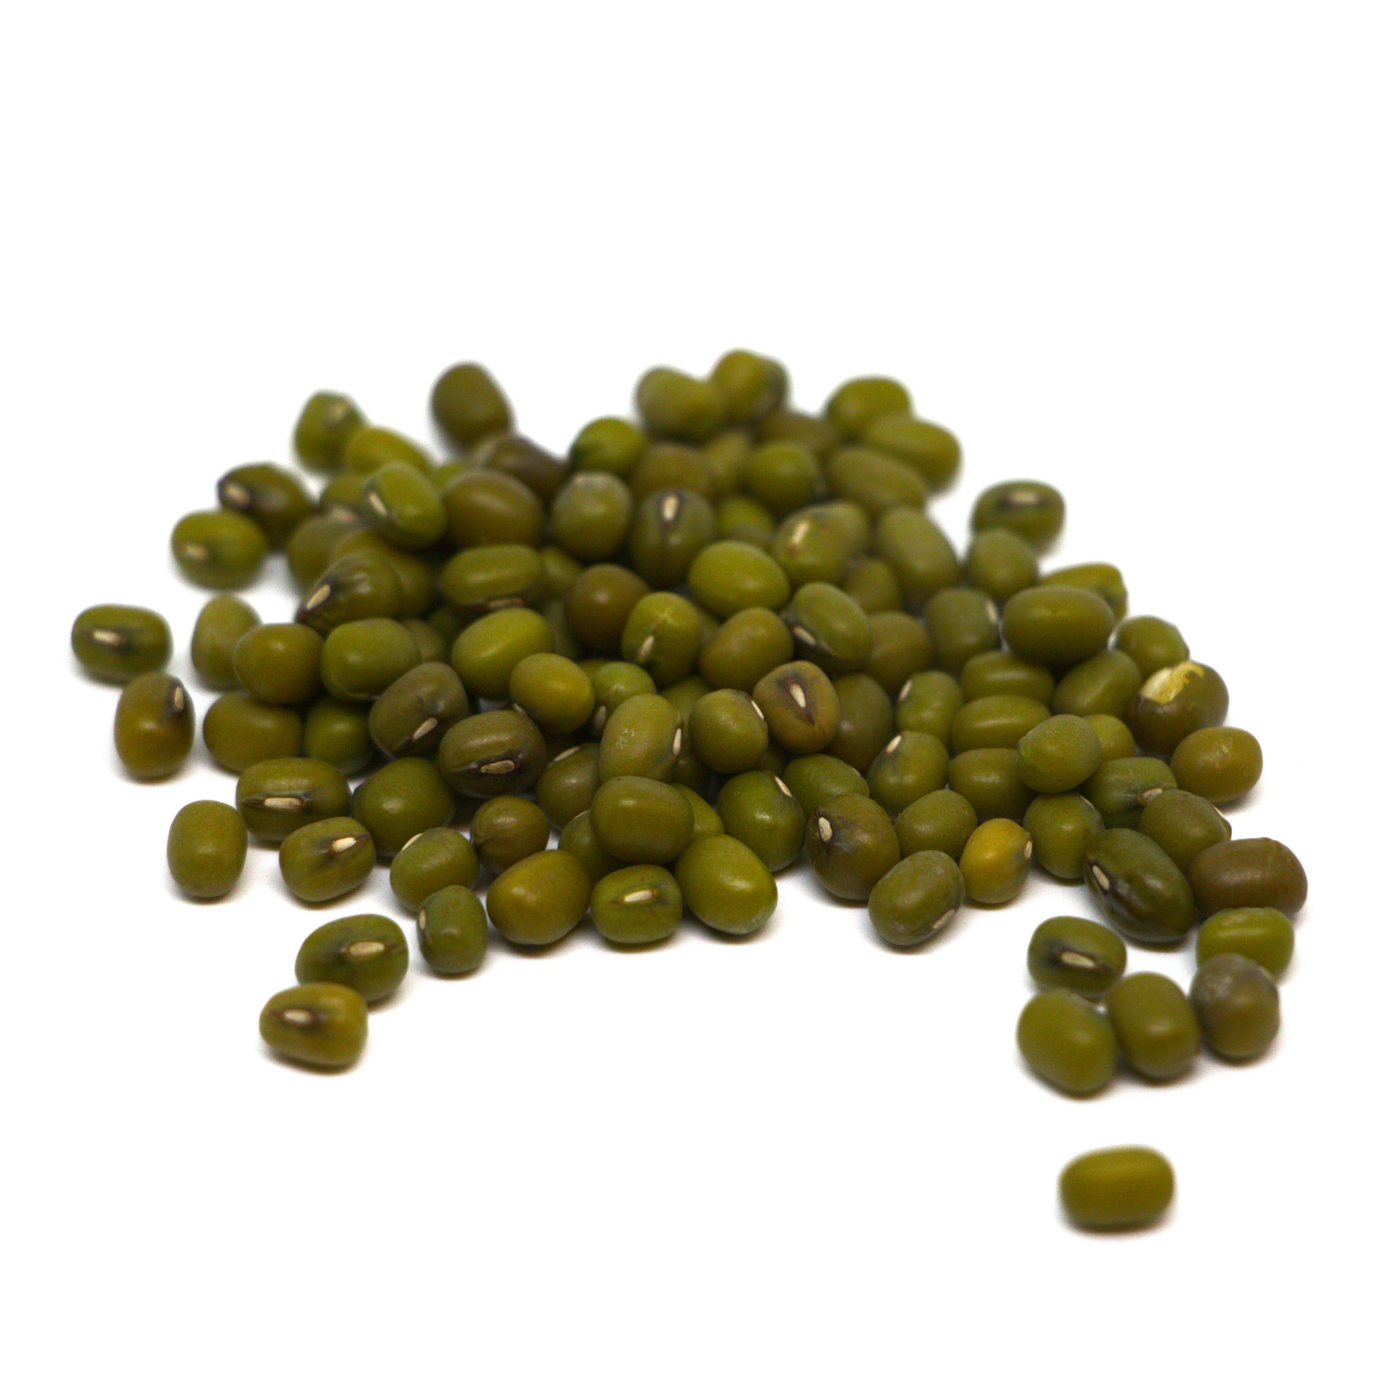 Organic seeds of mung bean